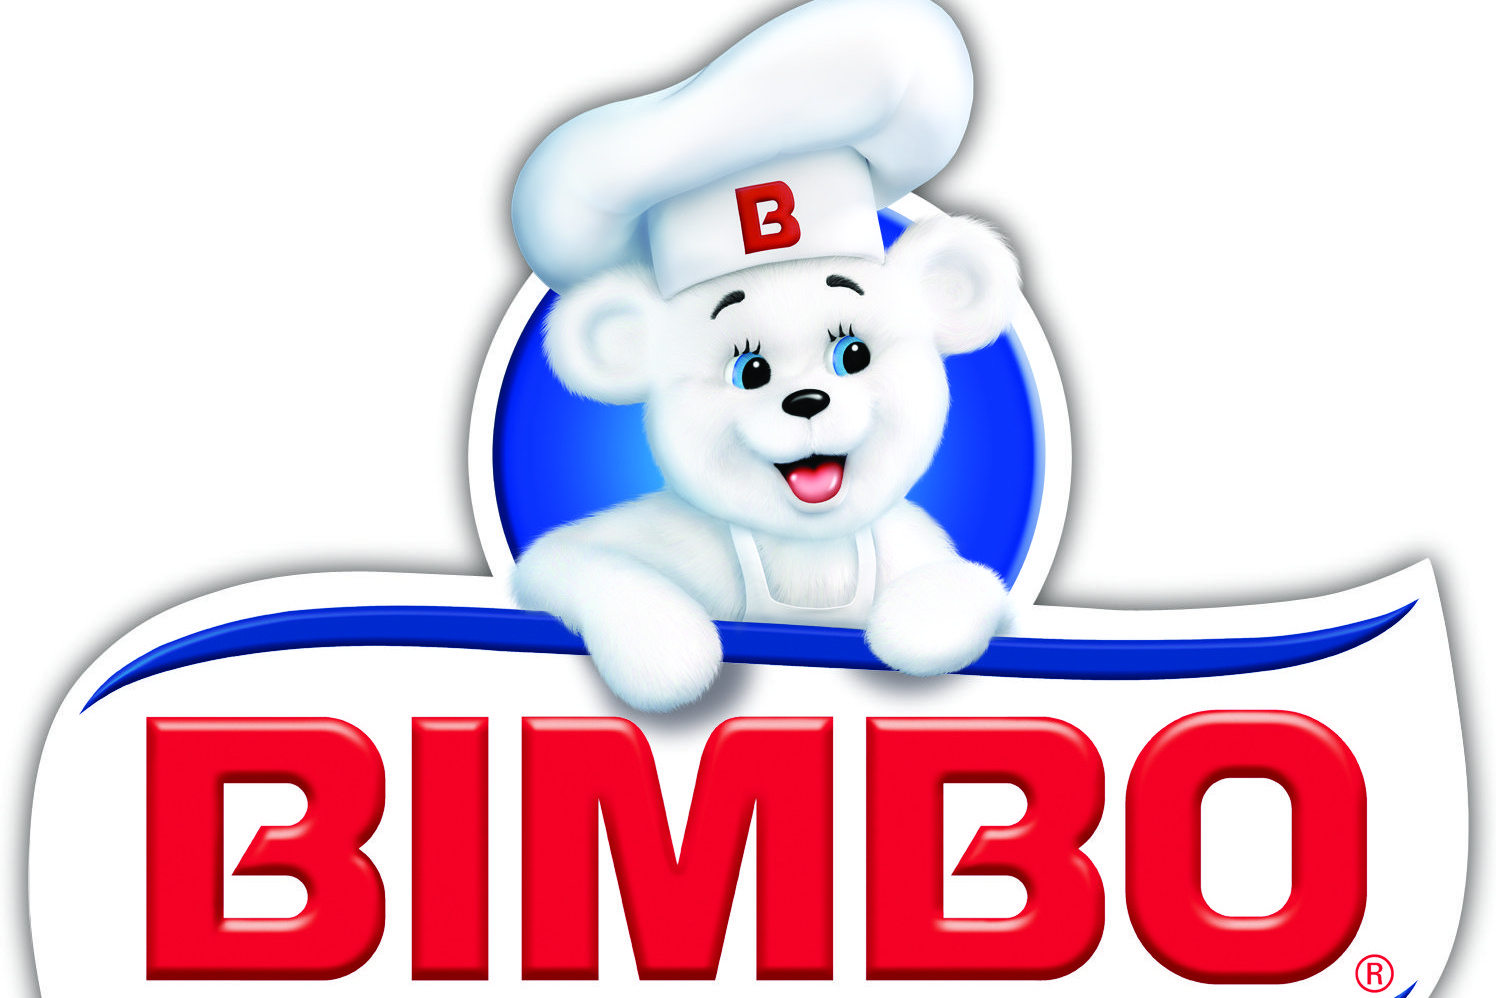 Bimbo Brand Is Popular But Global Penetration Is Weak Kantar